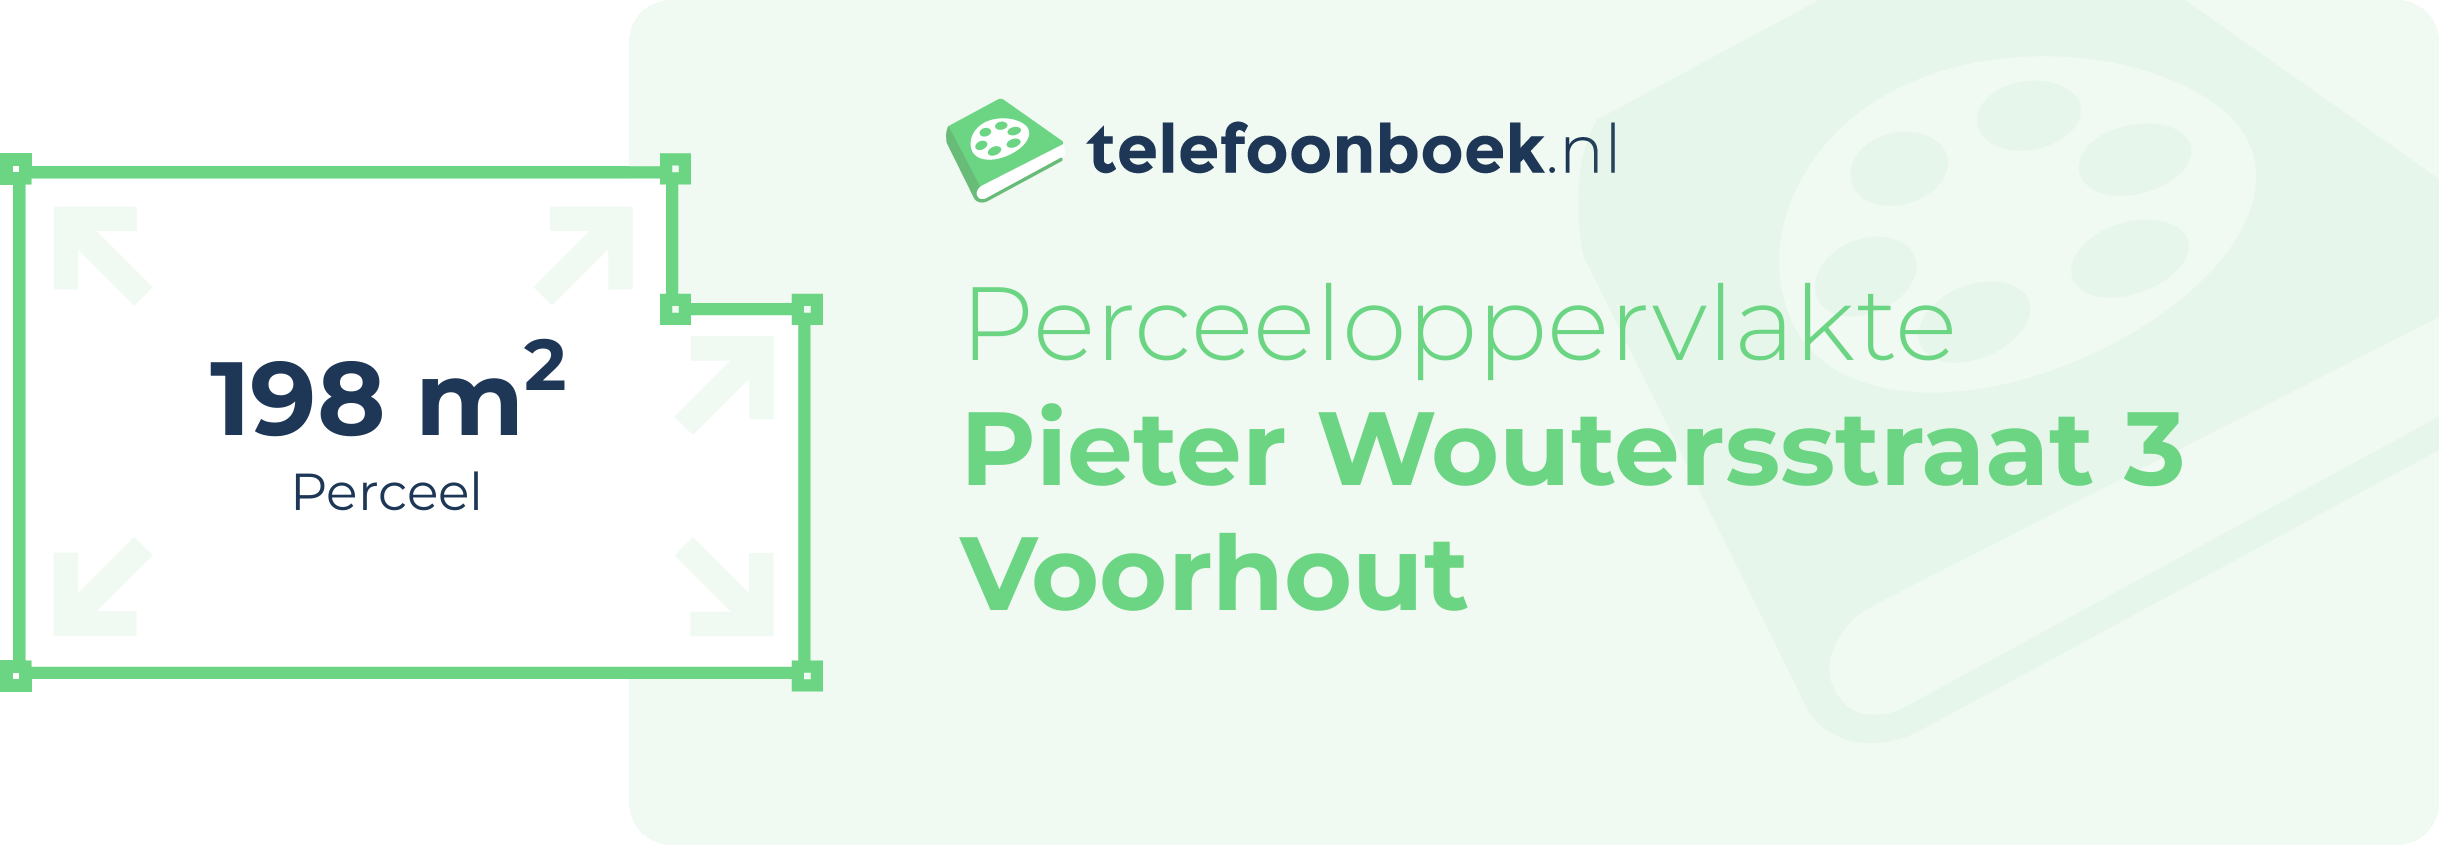 Perceeloppervlakte Pieter Woutersstraat 3 Voorhout